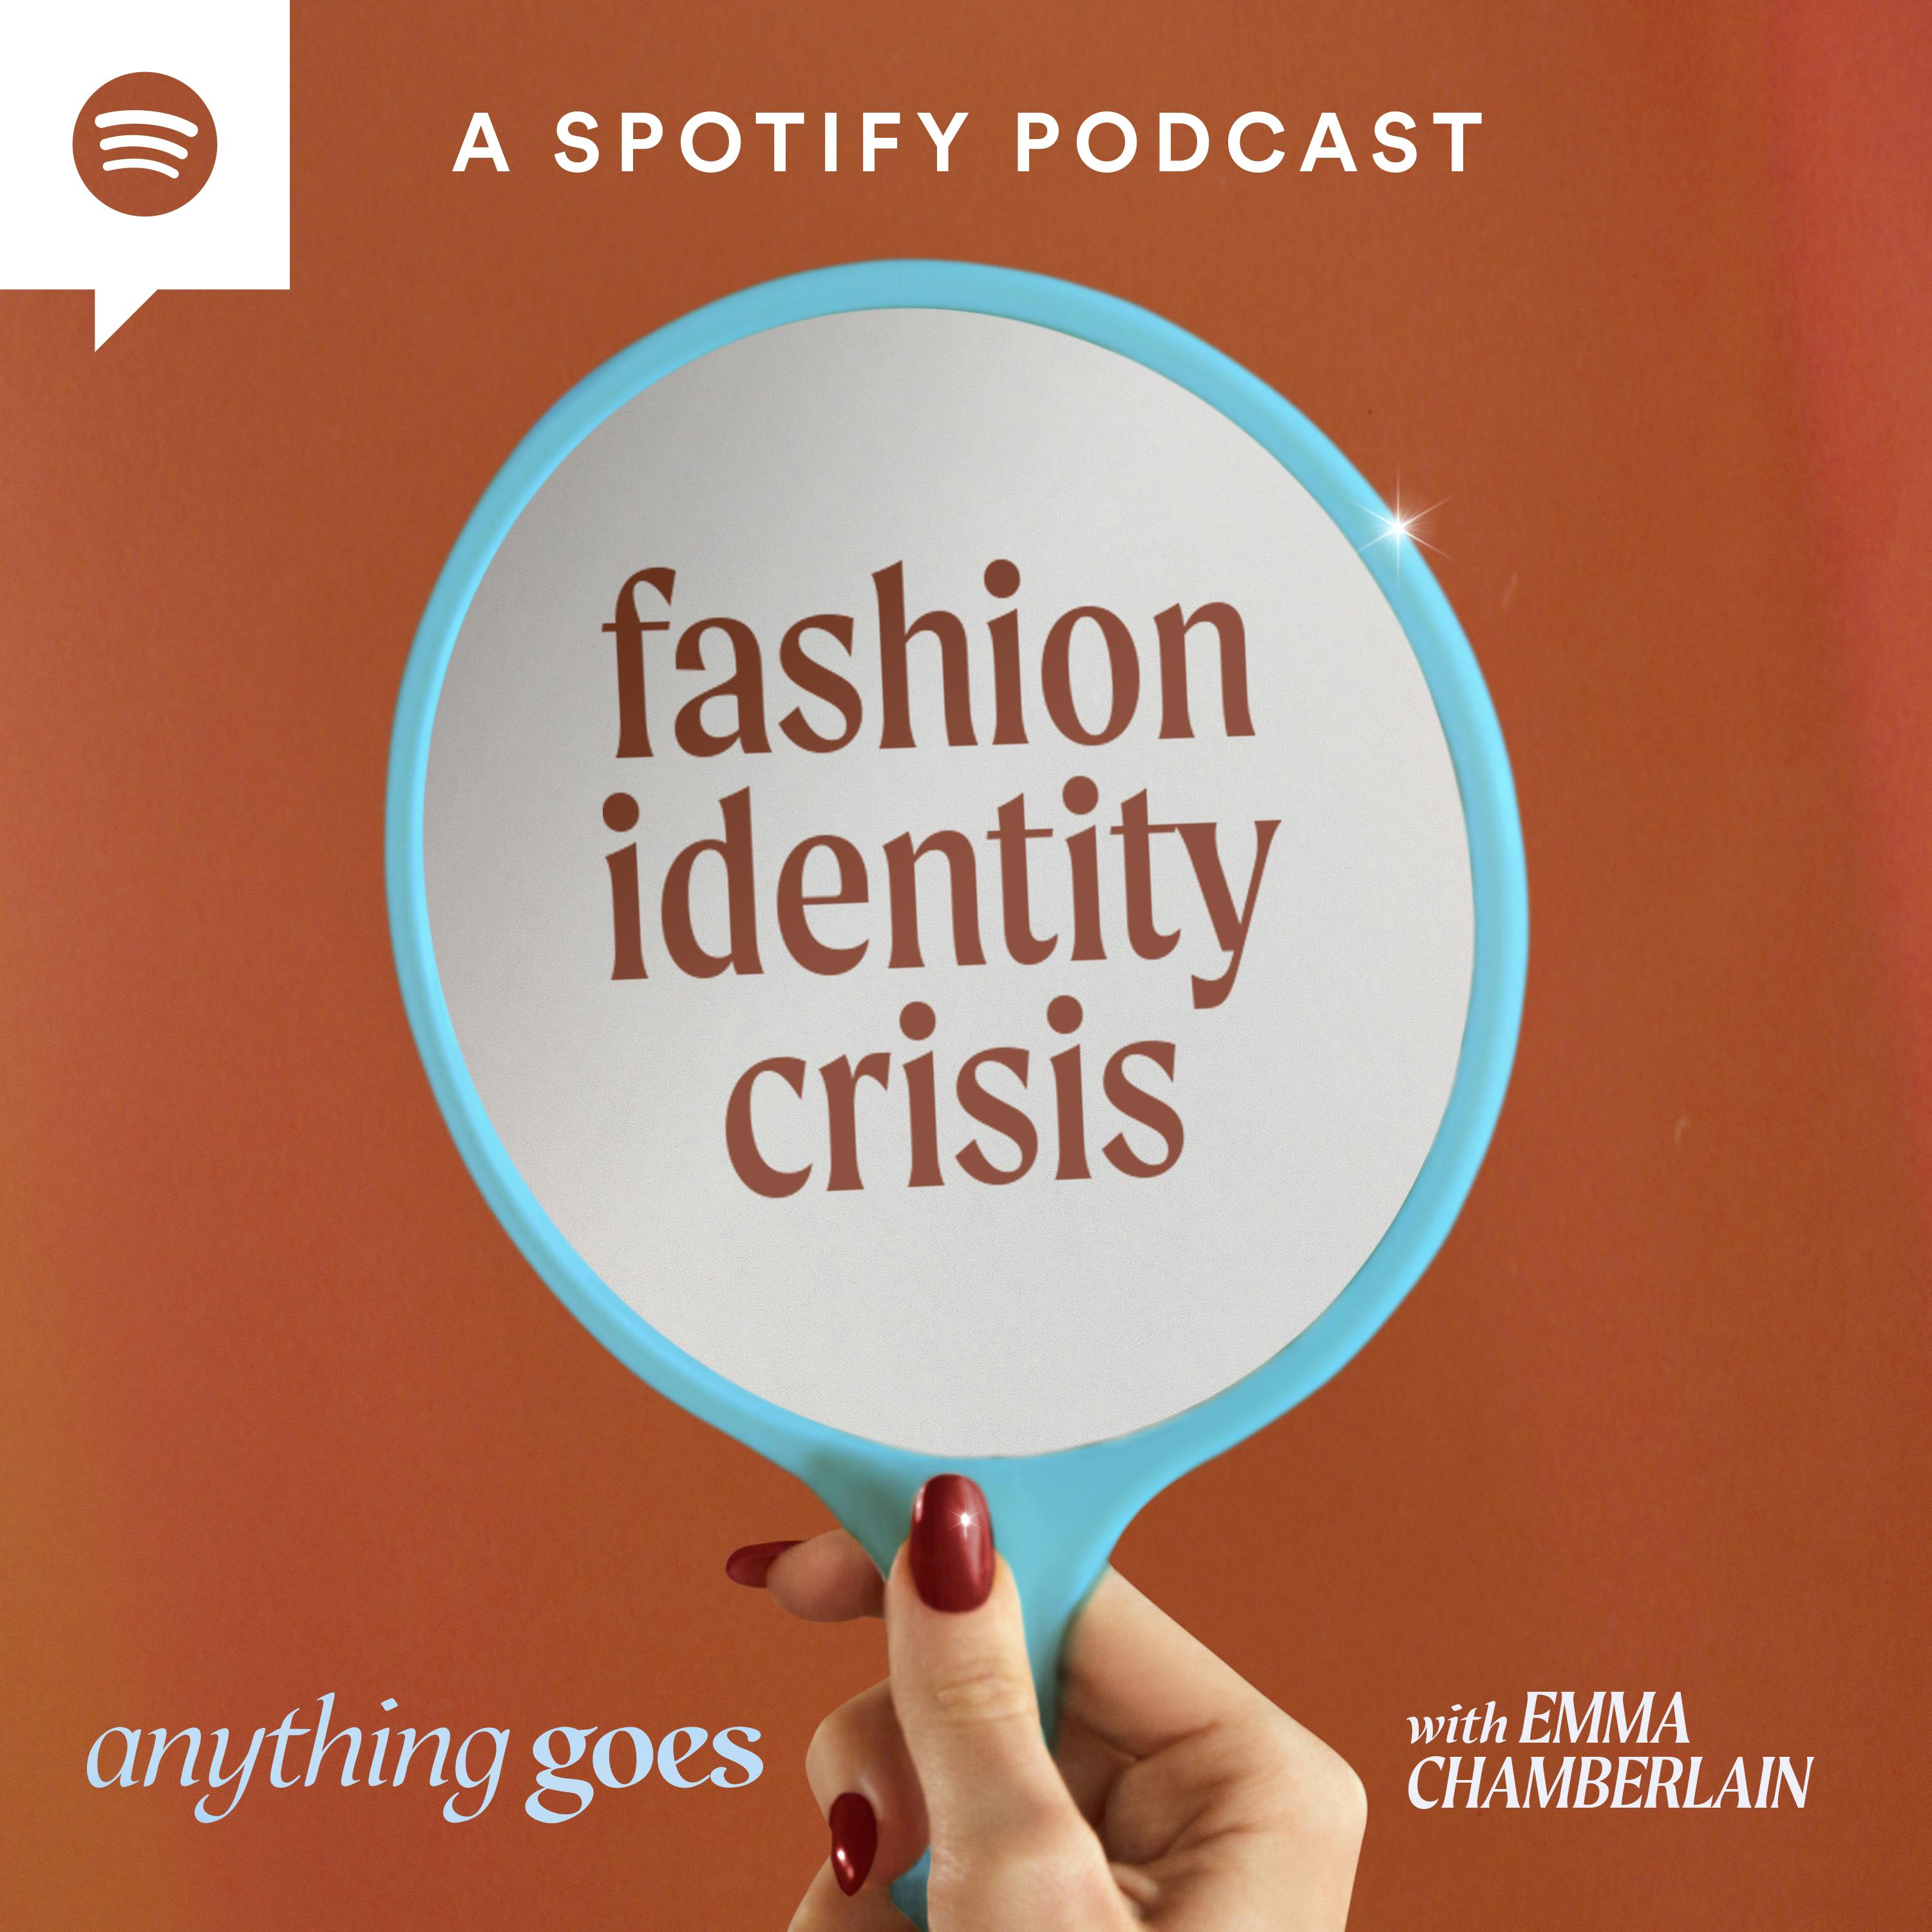 fashion identity crisis [video]